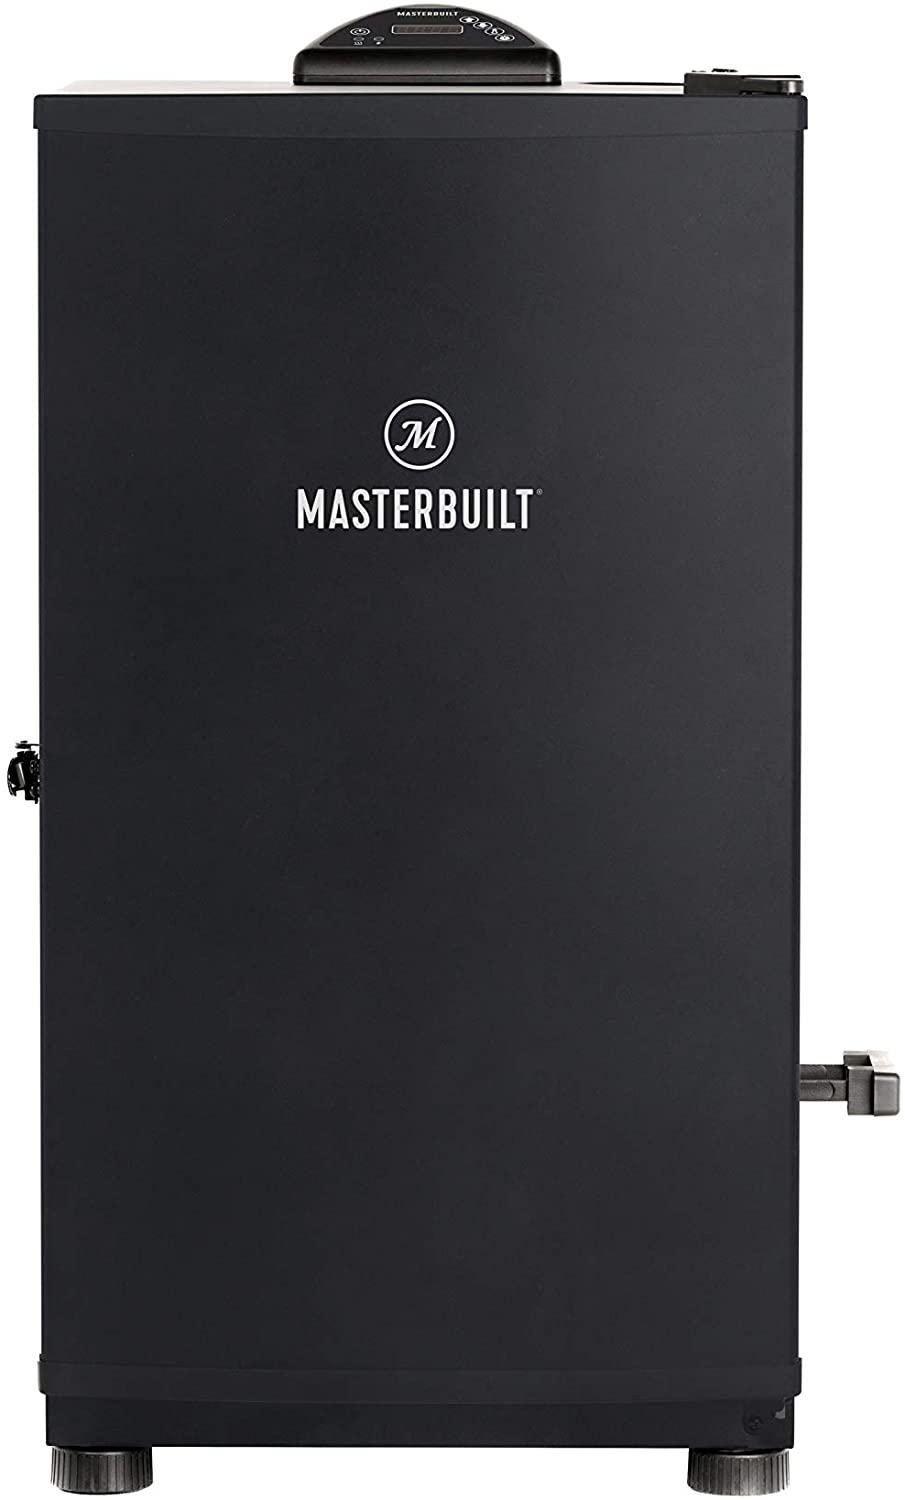 Masterbuilt MB20071117 Electric Digital Smoker